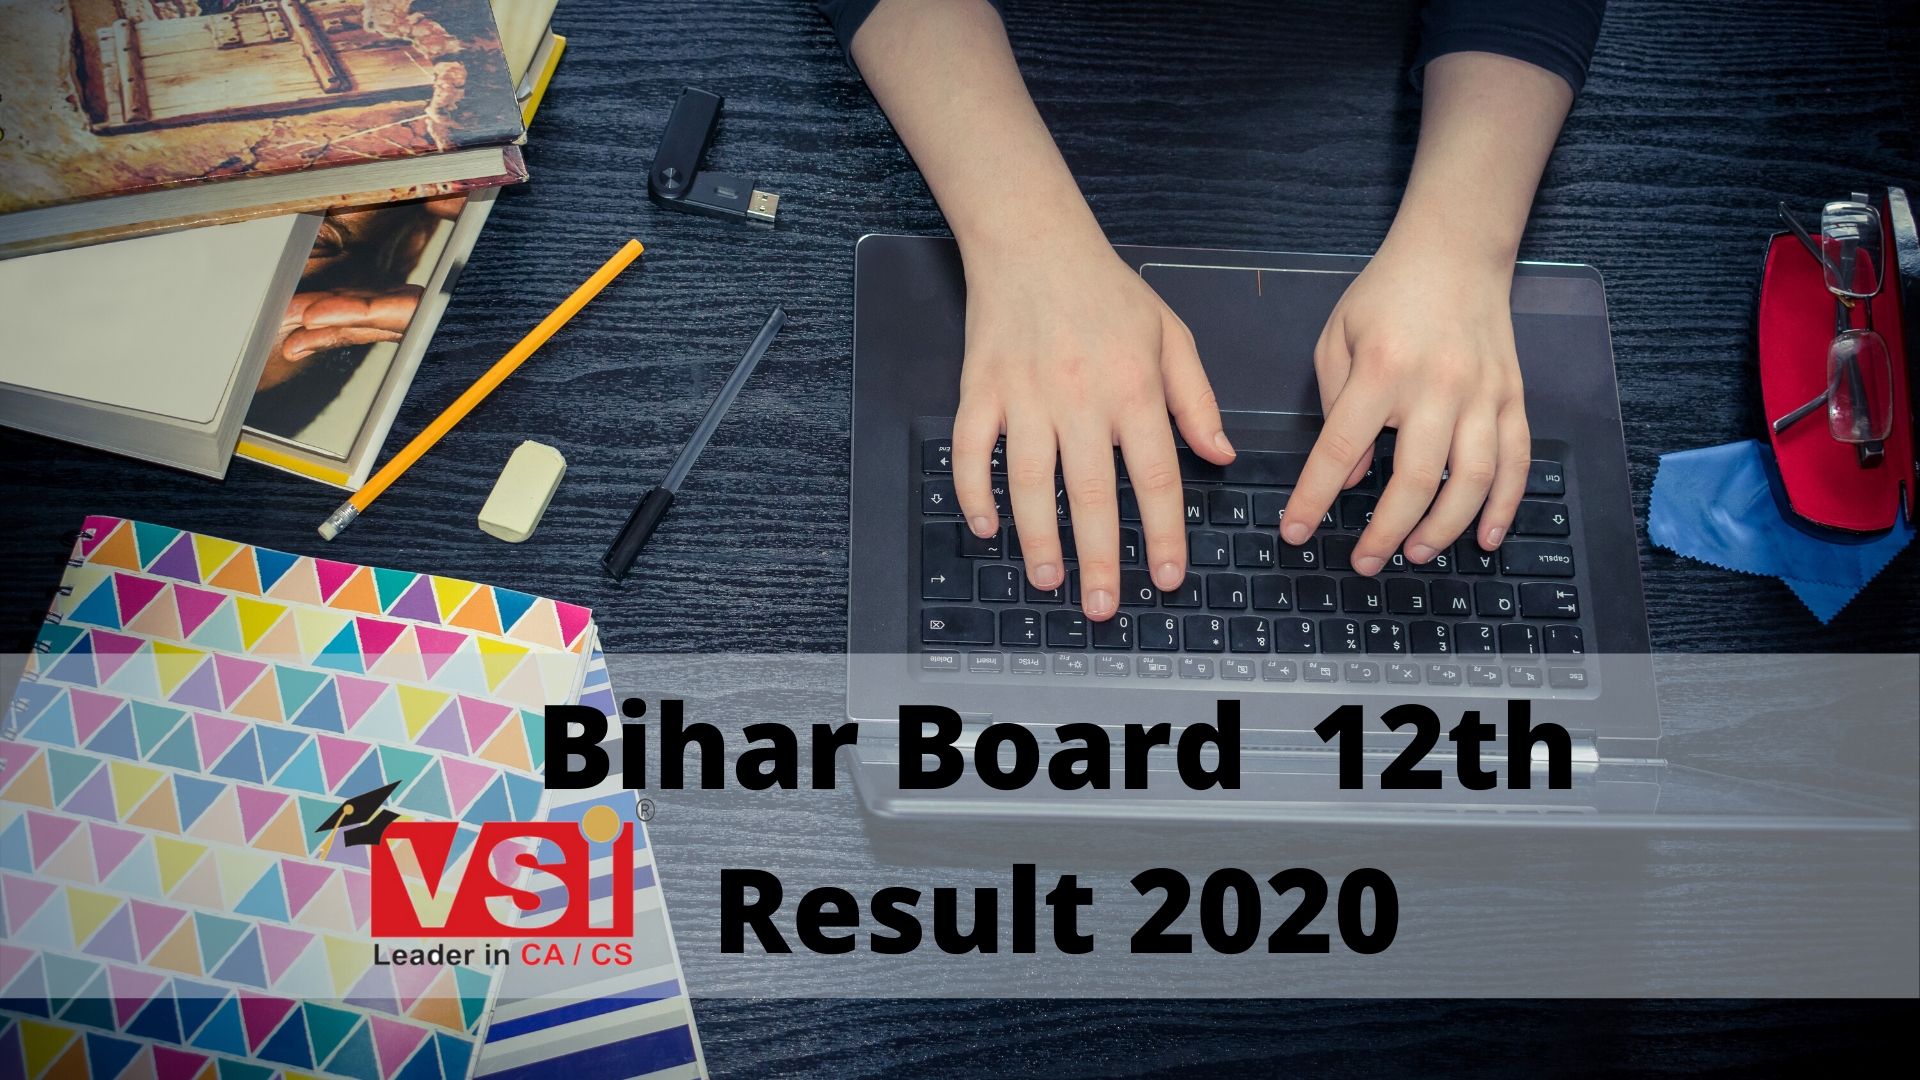 BSEB Bihar Board Class 12th Result 2020- Check Here